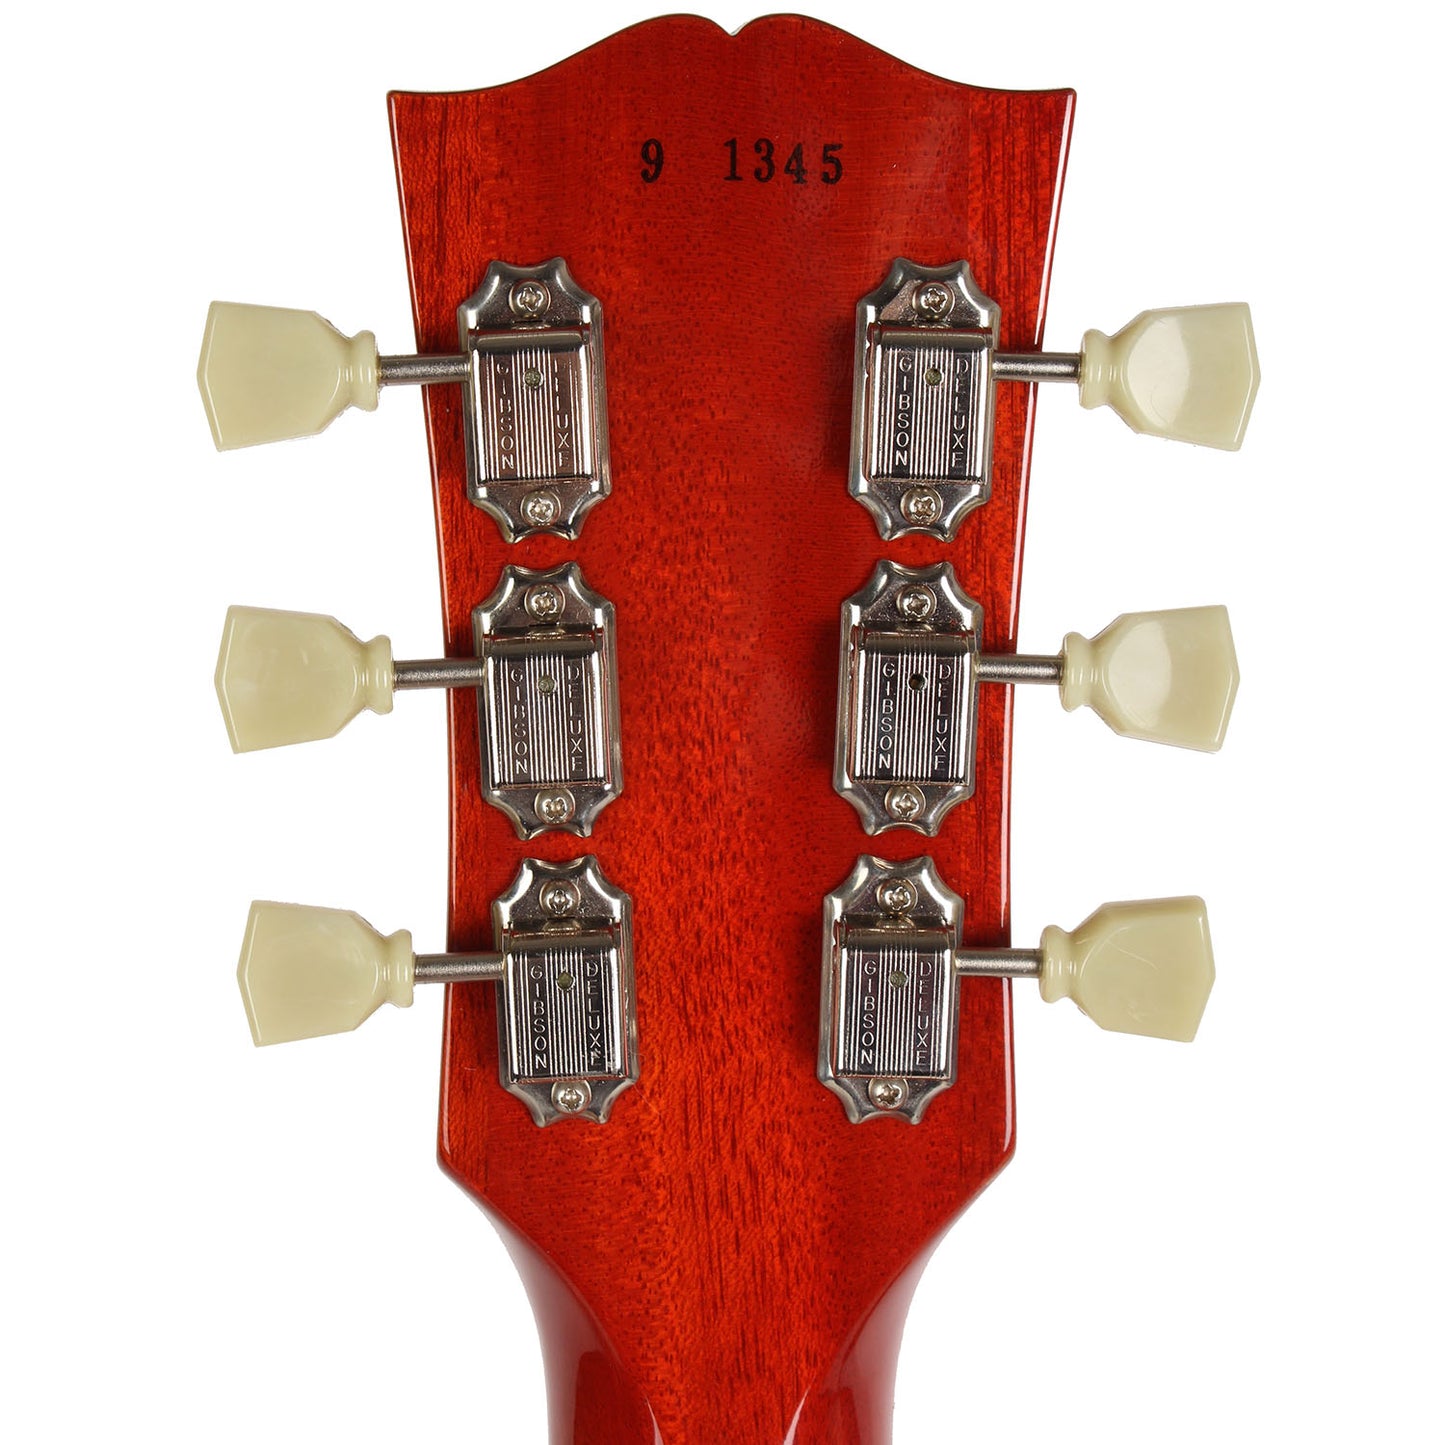 2011 Gibson Custom Shop 1959 Reissue Les Paul